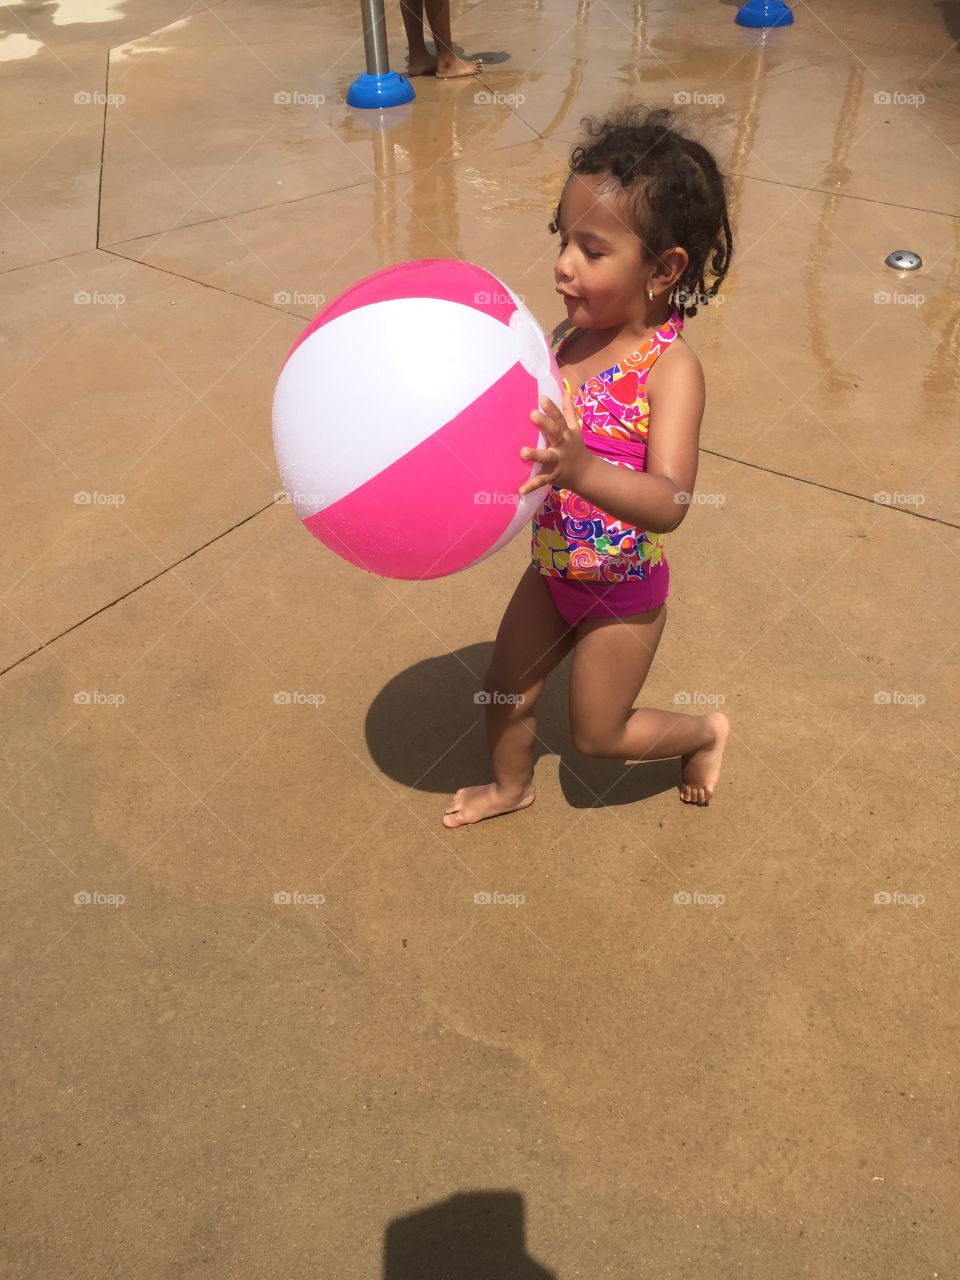 Splash pad time with beach ball 